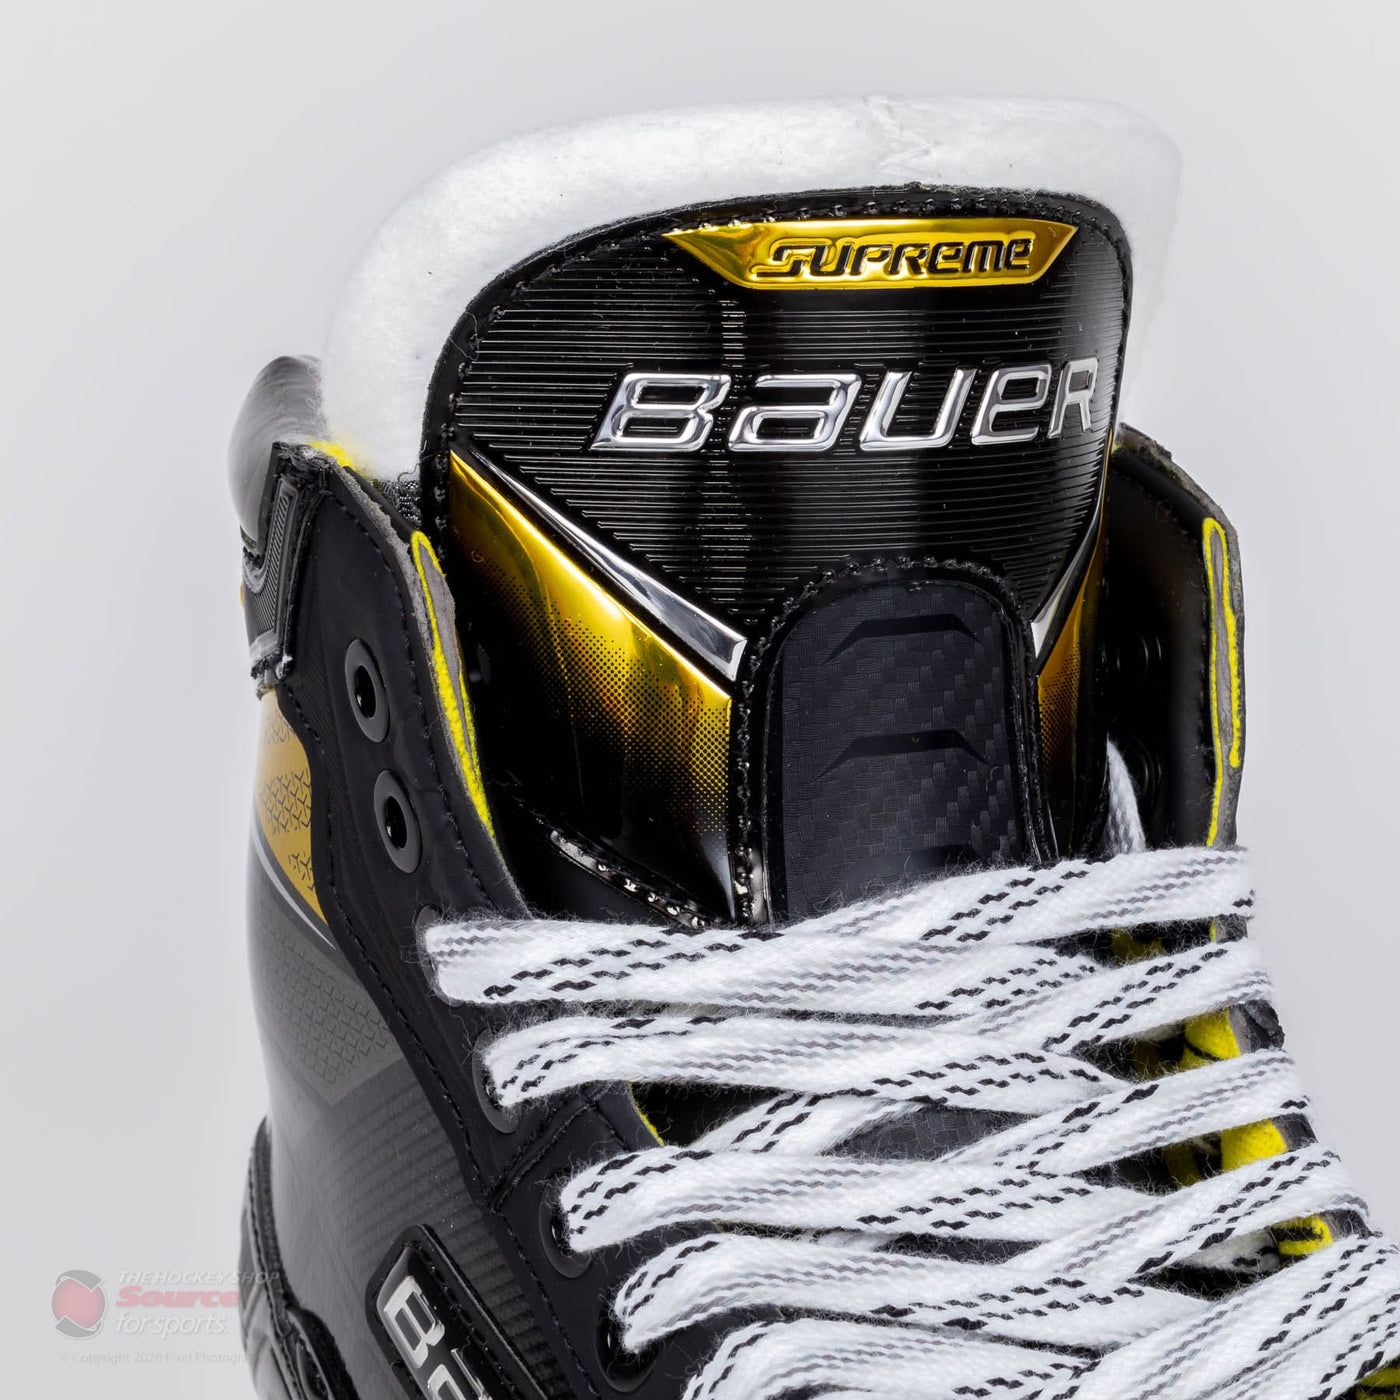 Bauer Supreme 3S Pro Senior Goalie Skates